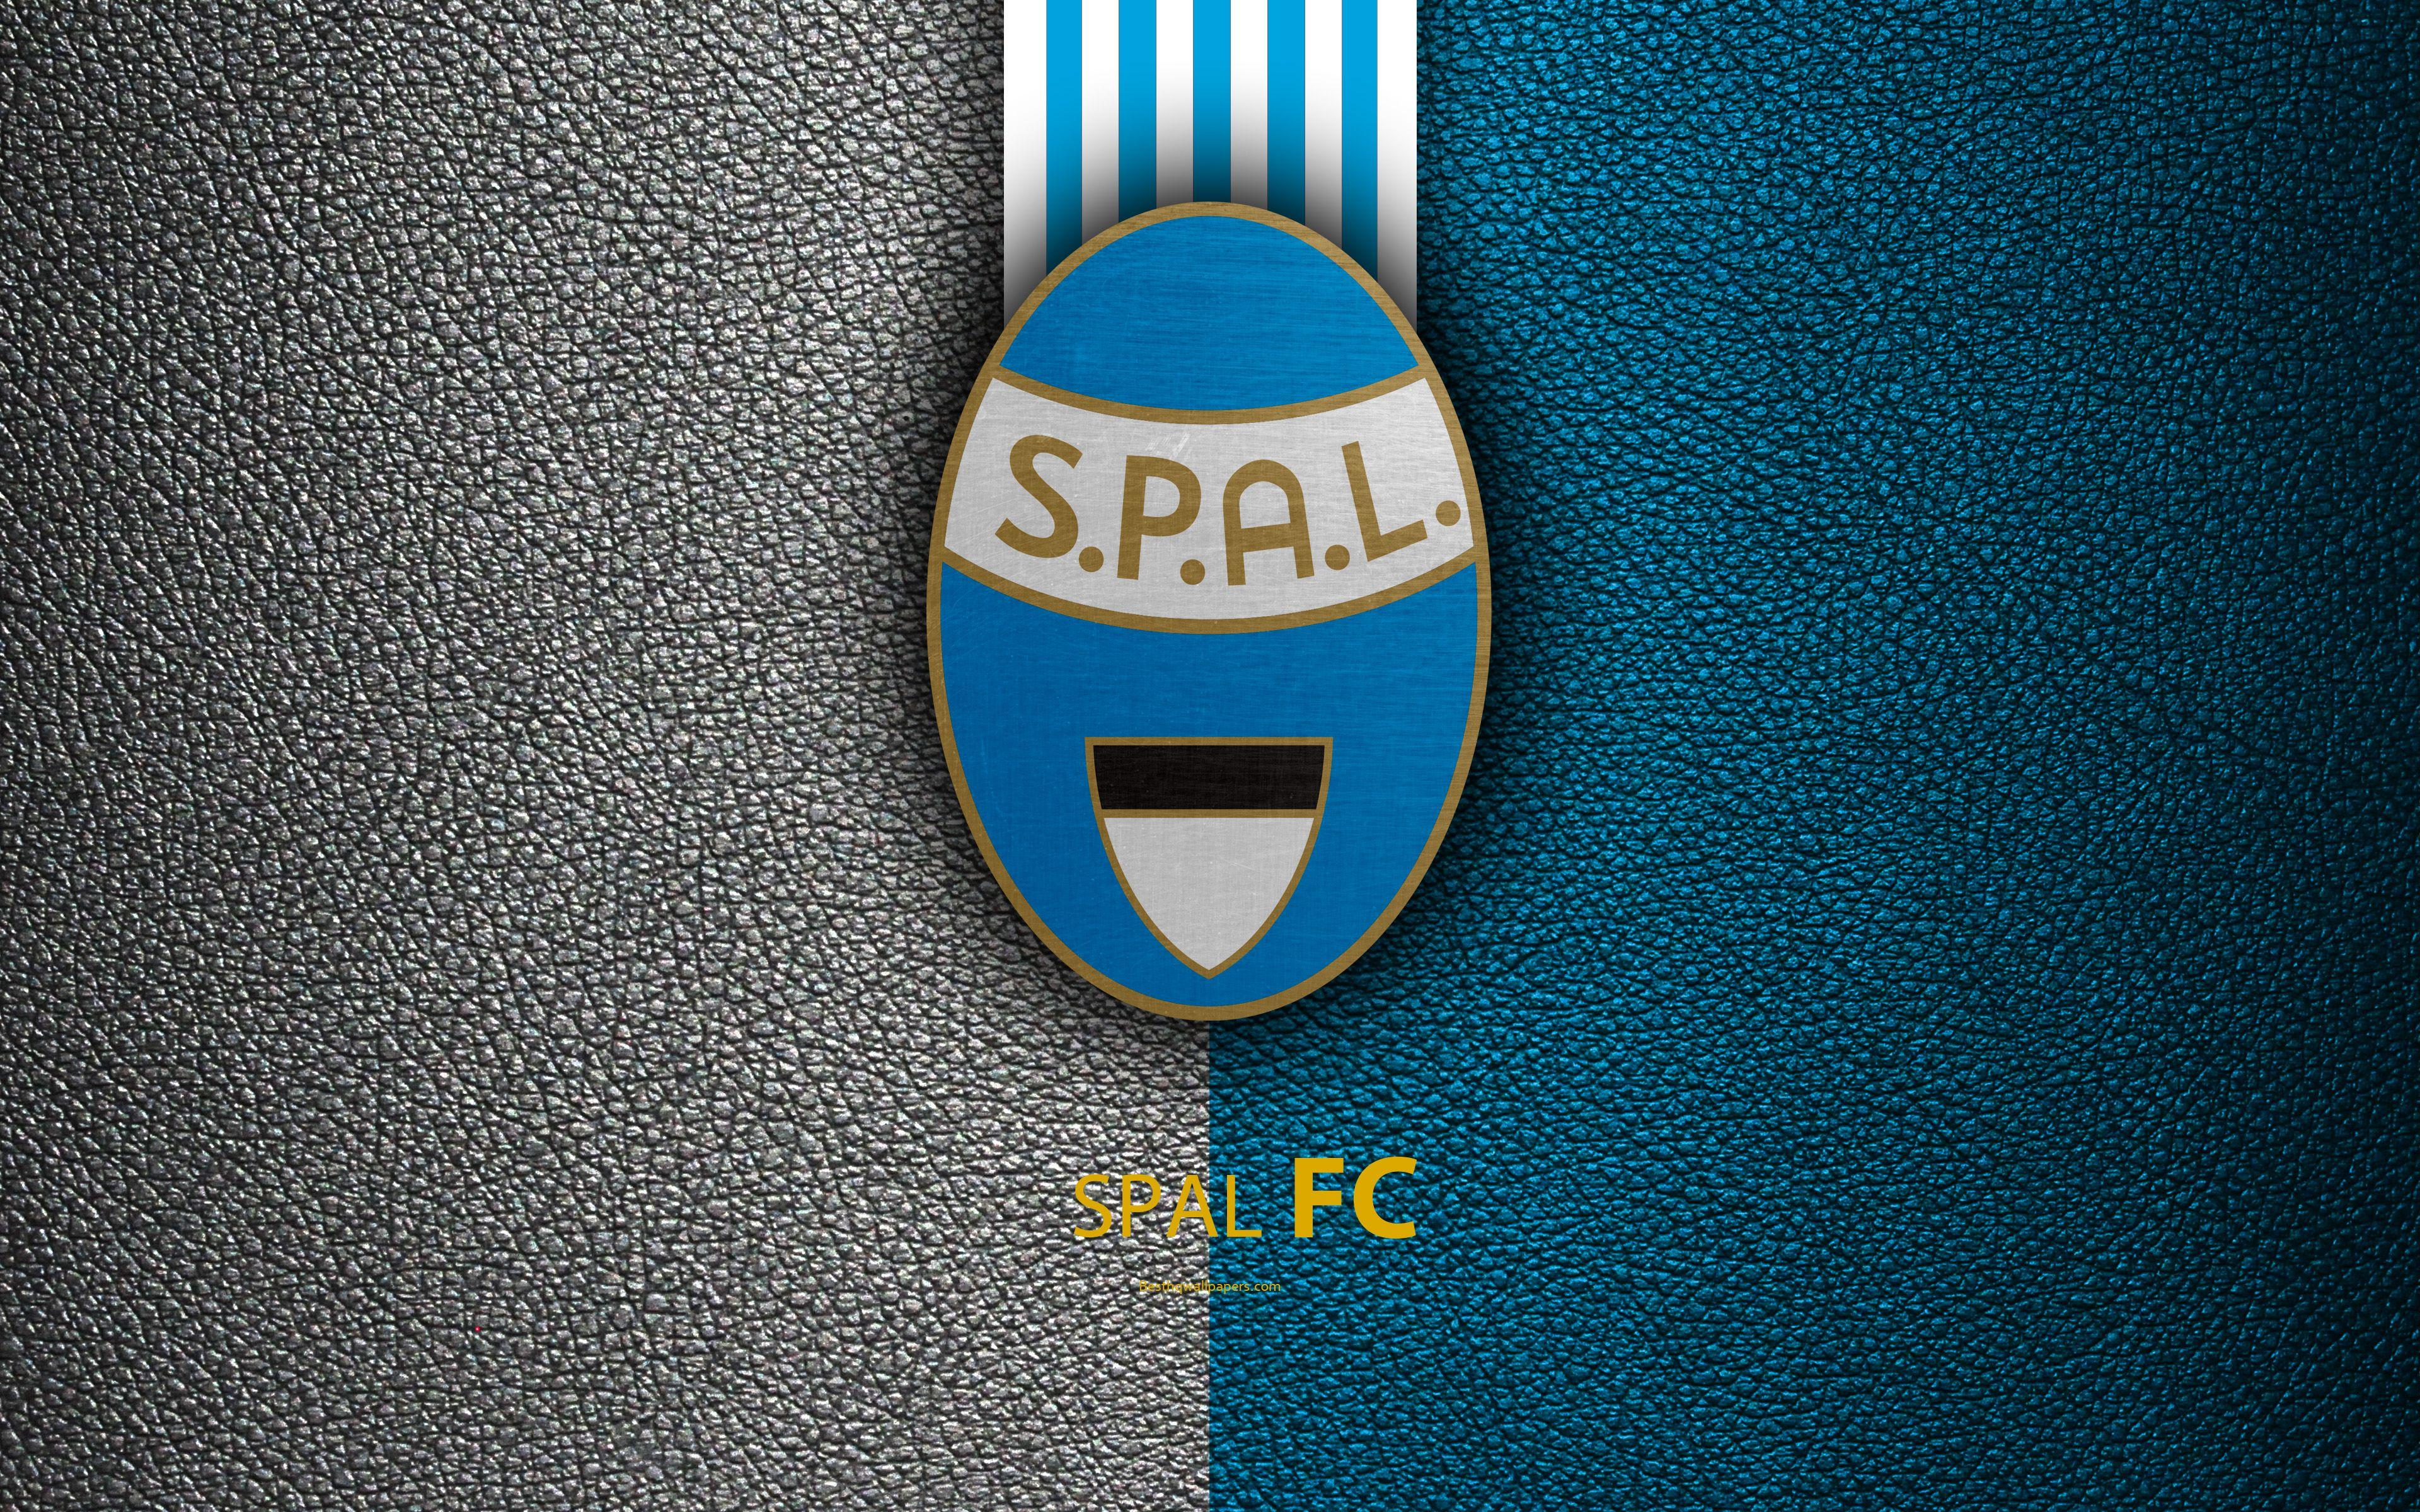 Download wallpaper SPAL FC, 4k, Italian football club, Serie A